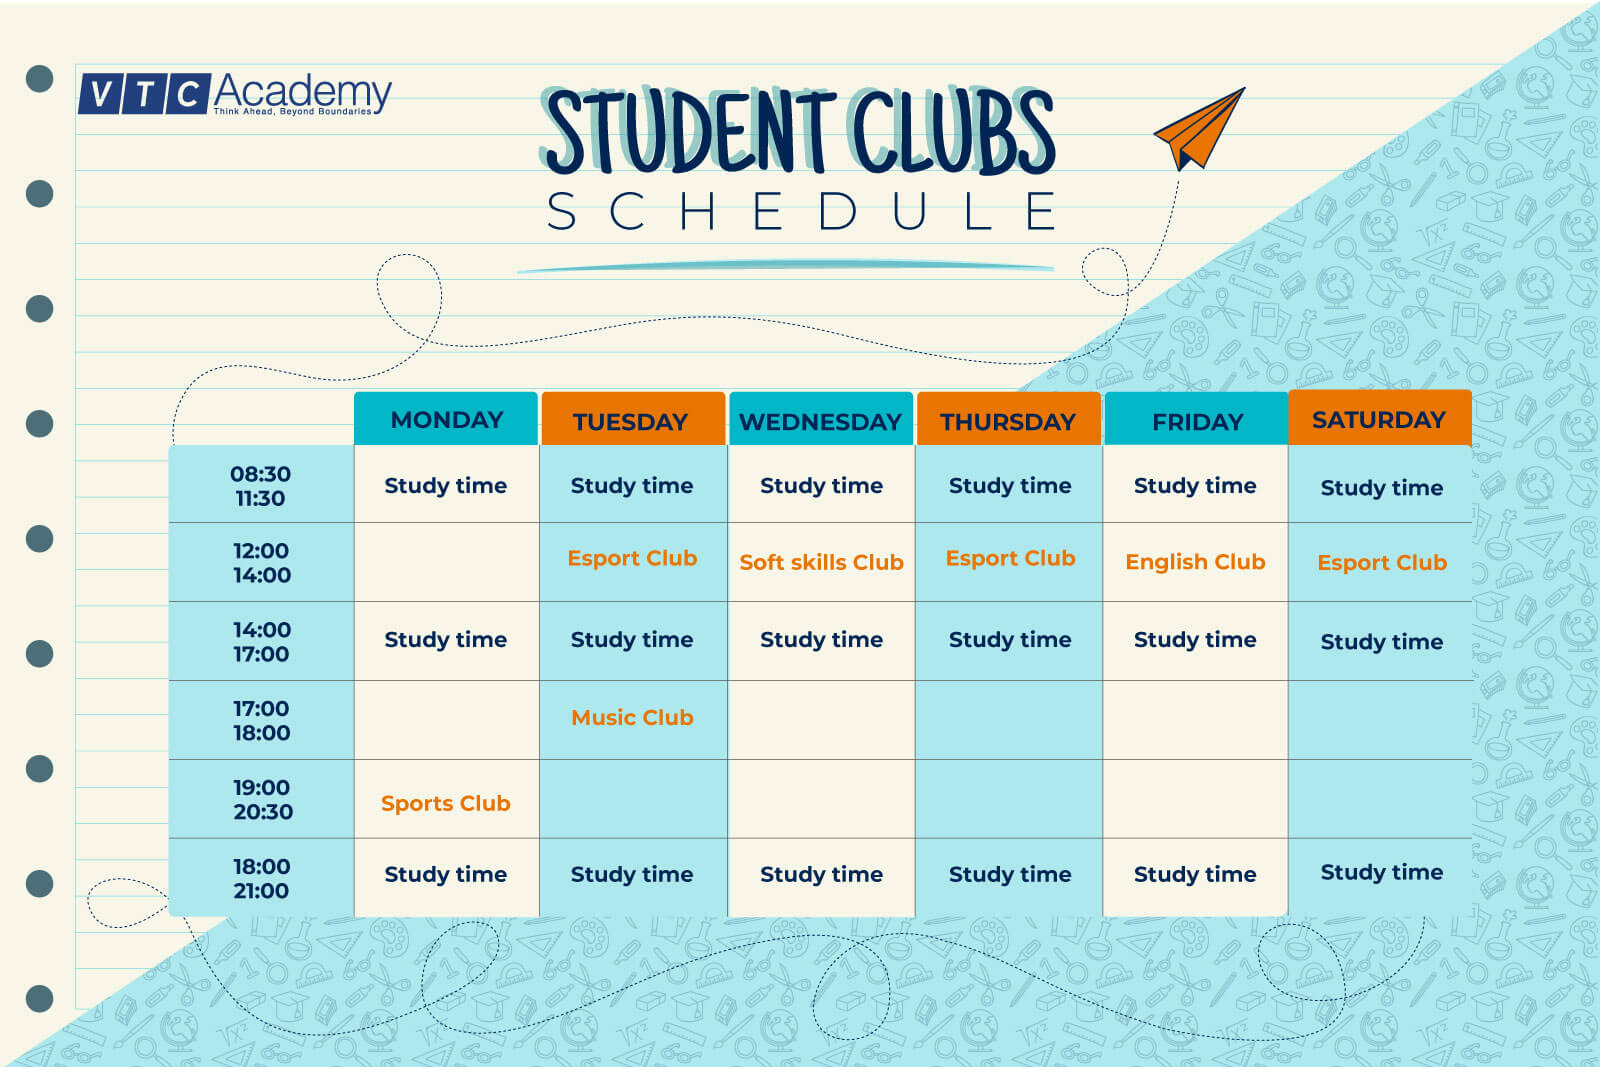 Student clubs | VTC Academy Plus